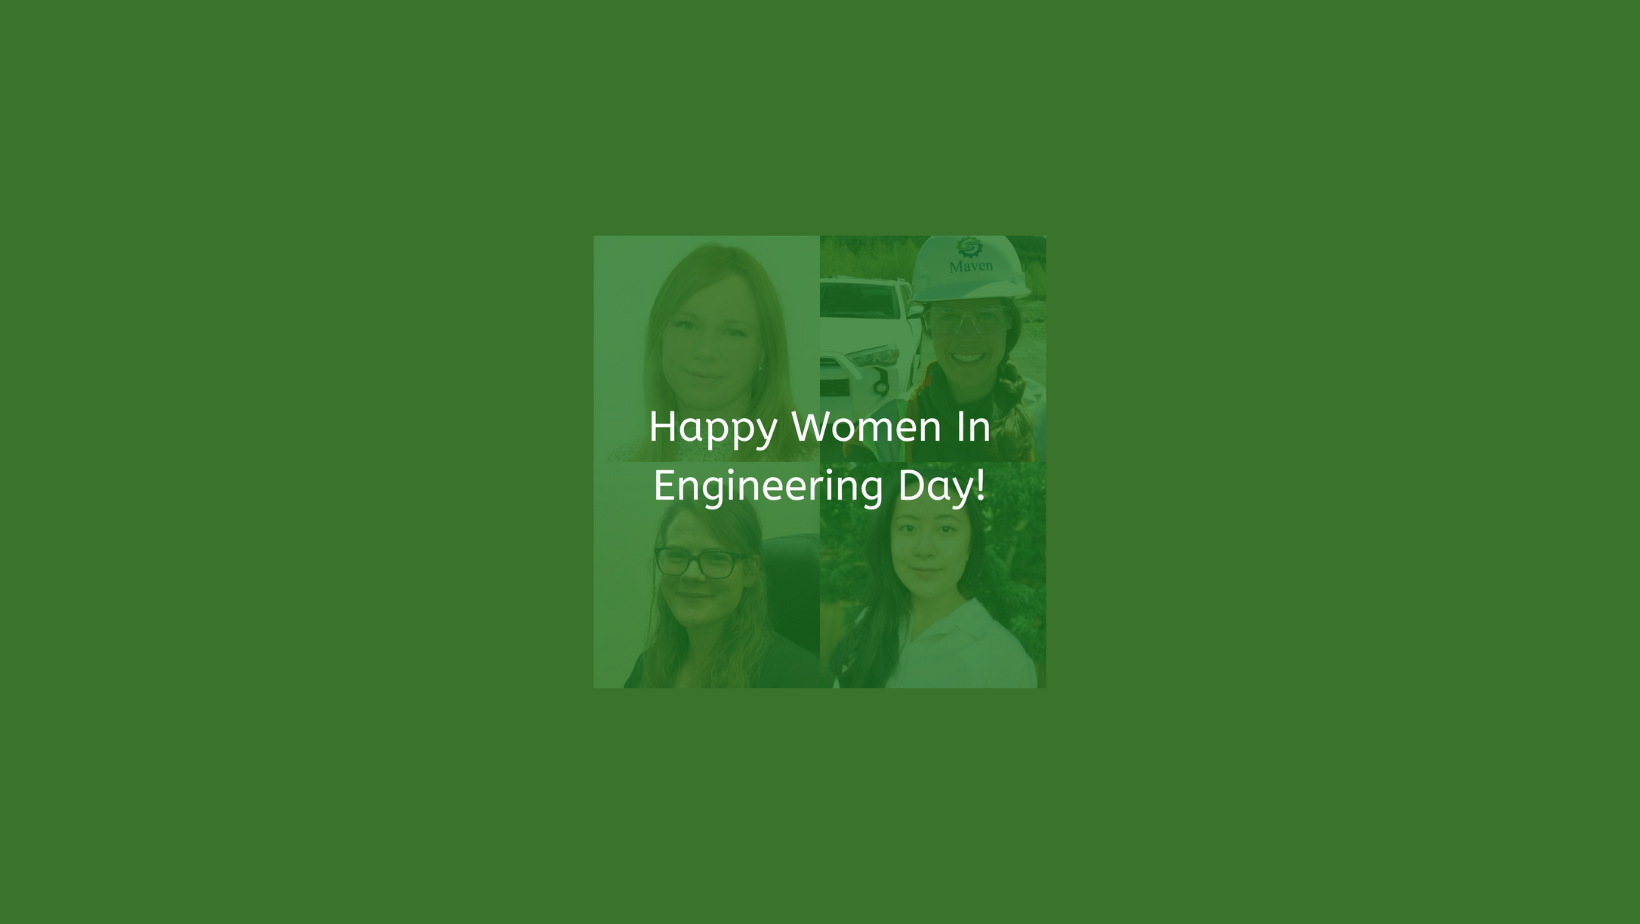 Engineering Day 2021 – Celebrating Women